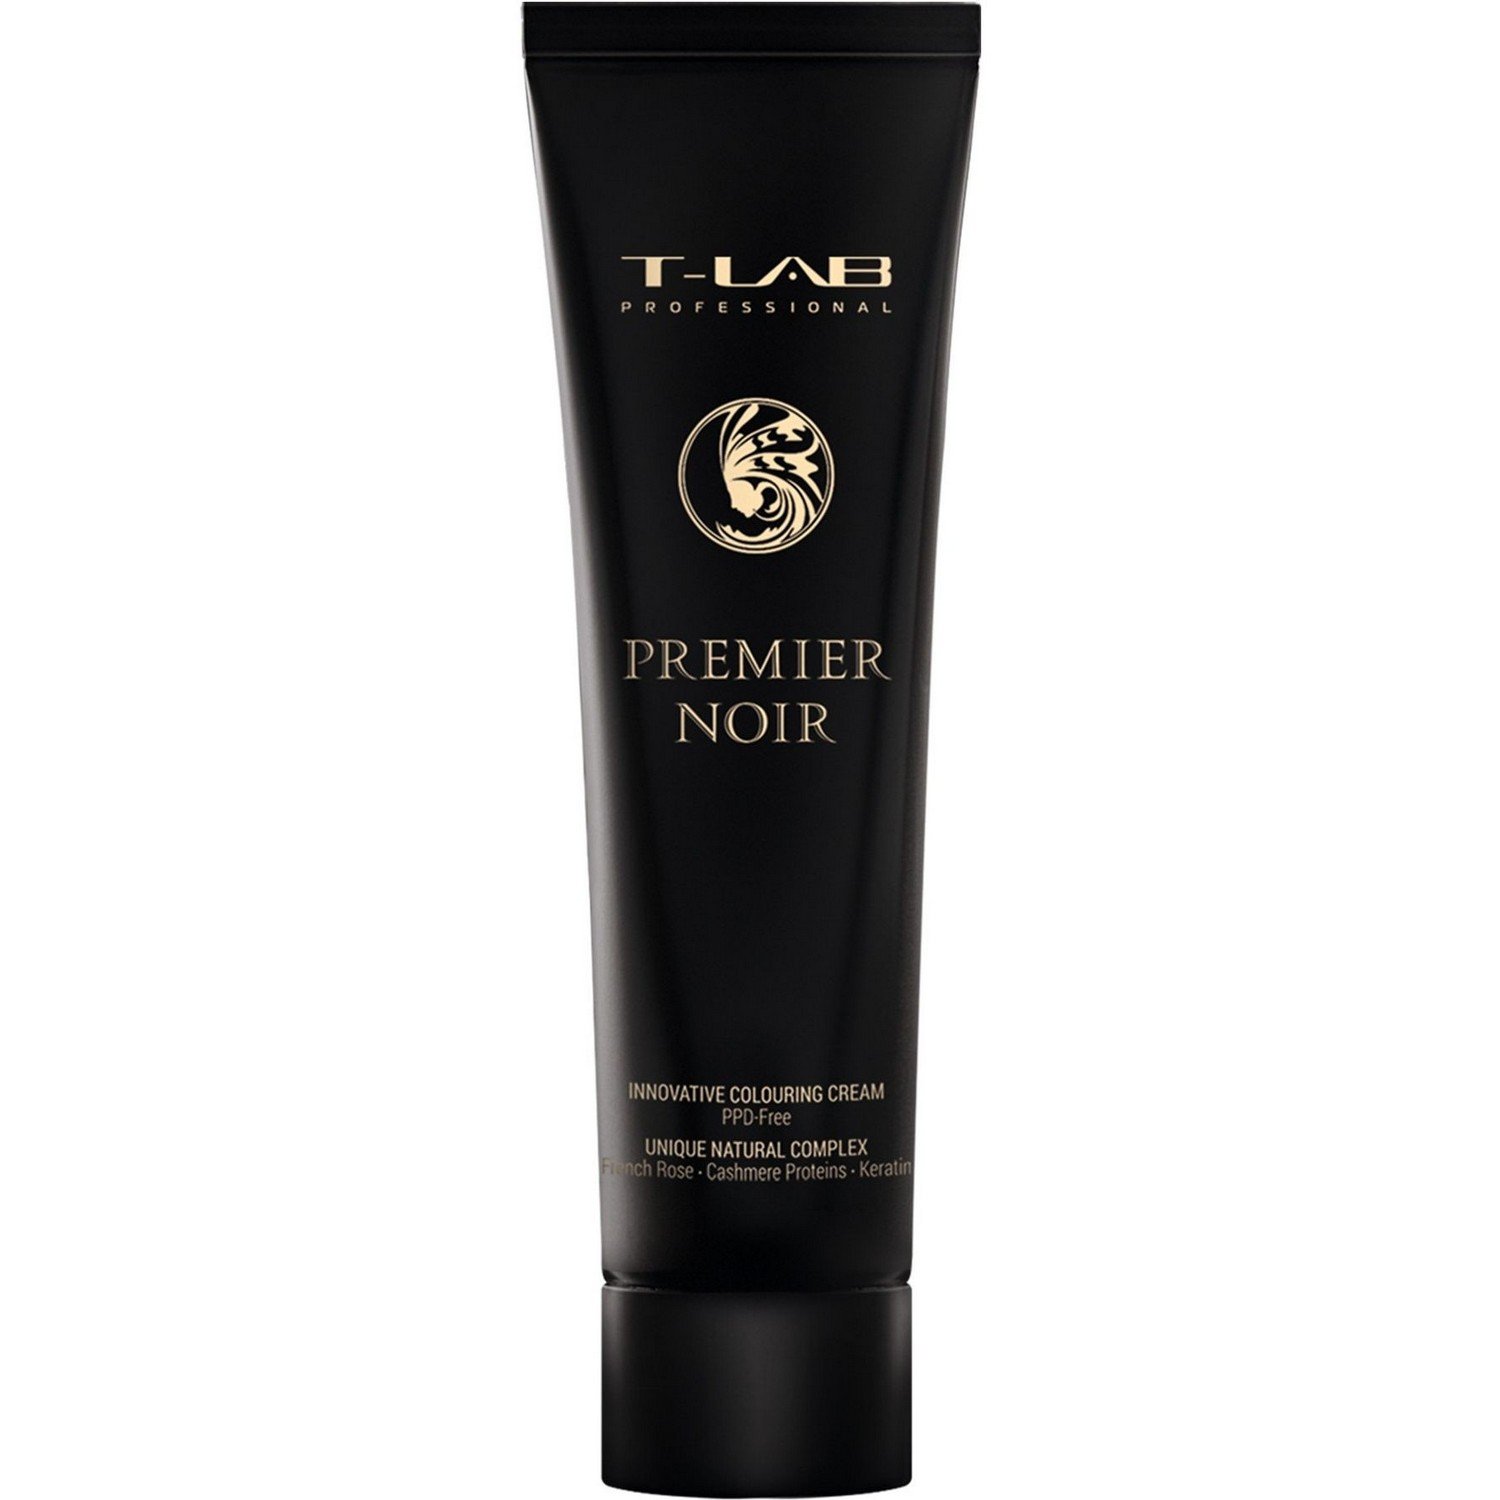 Крем-краска T-LAB Professional Premier Noir colouring cream, оттенок 8.42 (light copper iridescent blonde) - фото 1